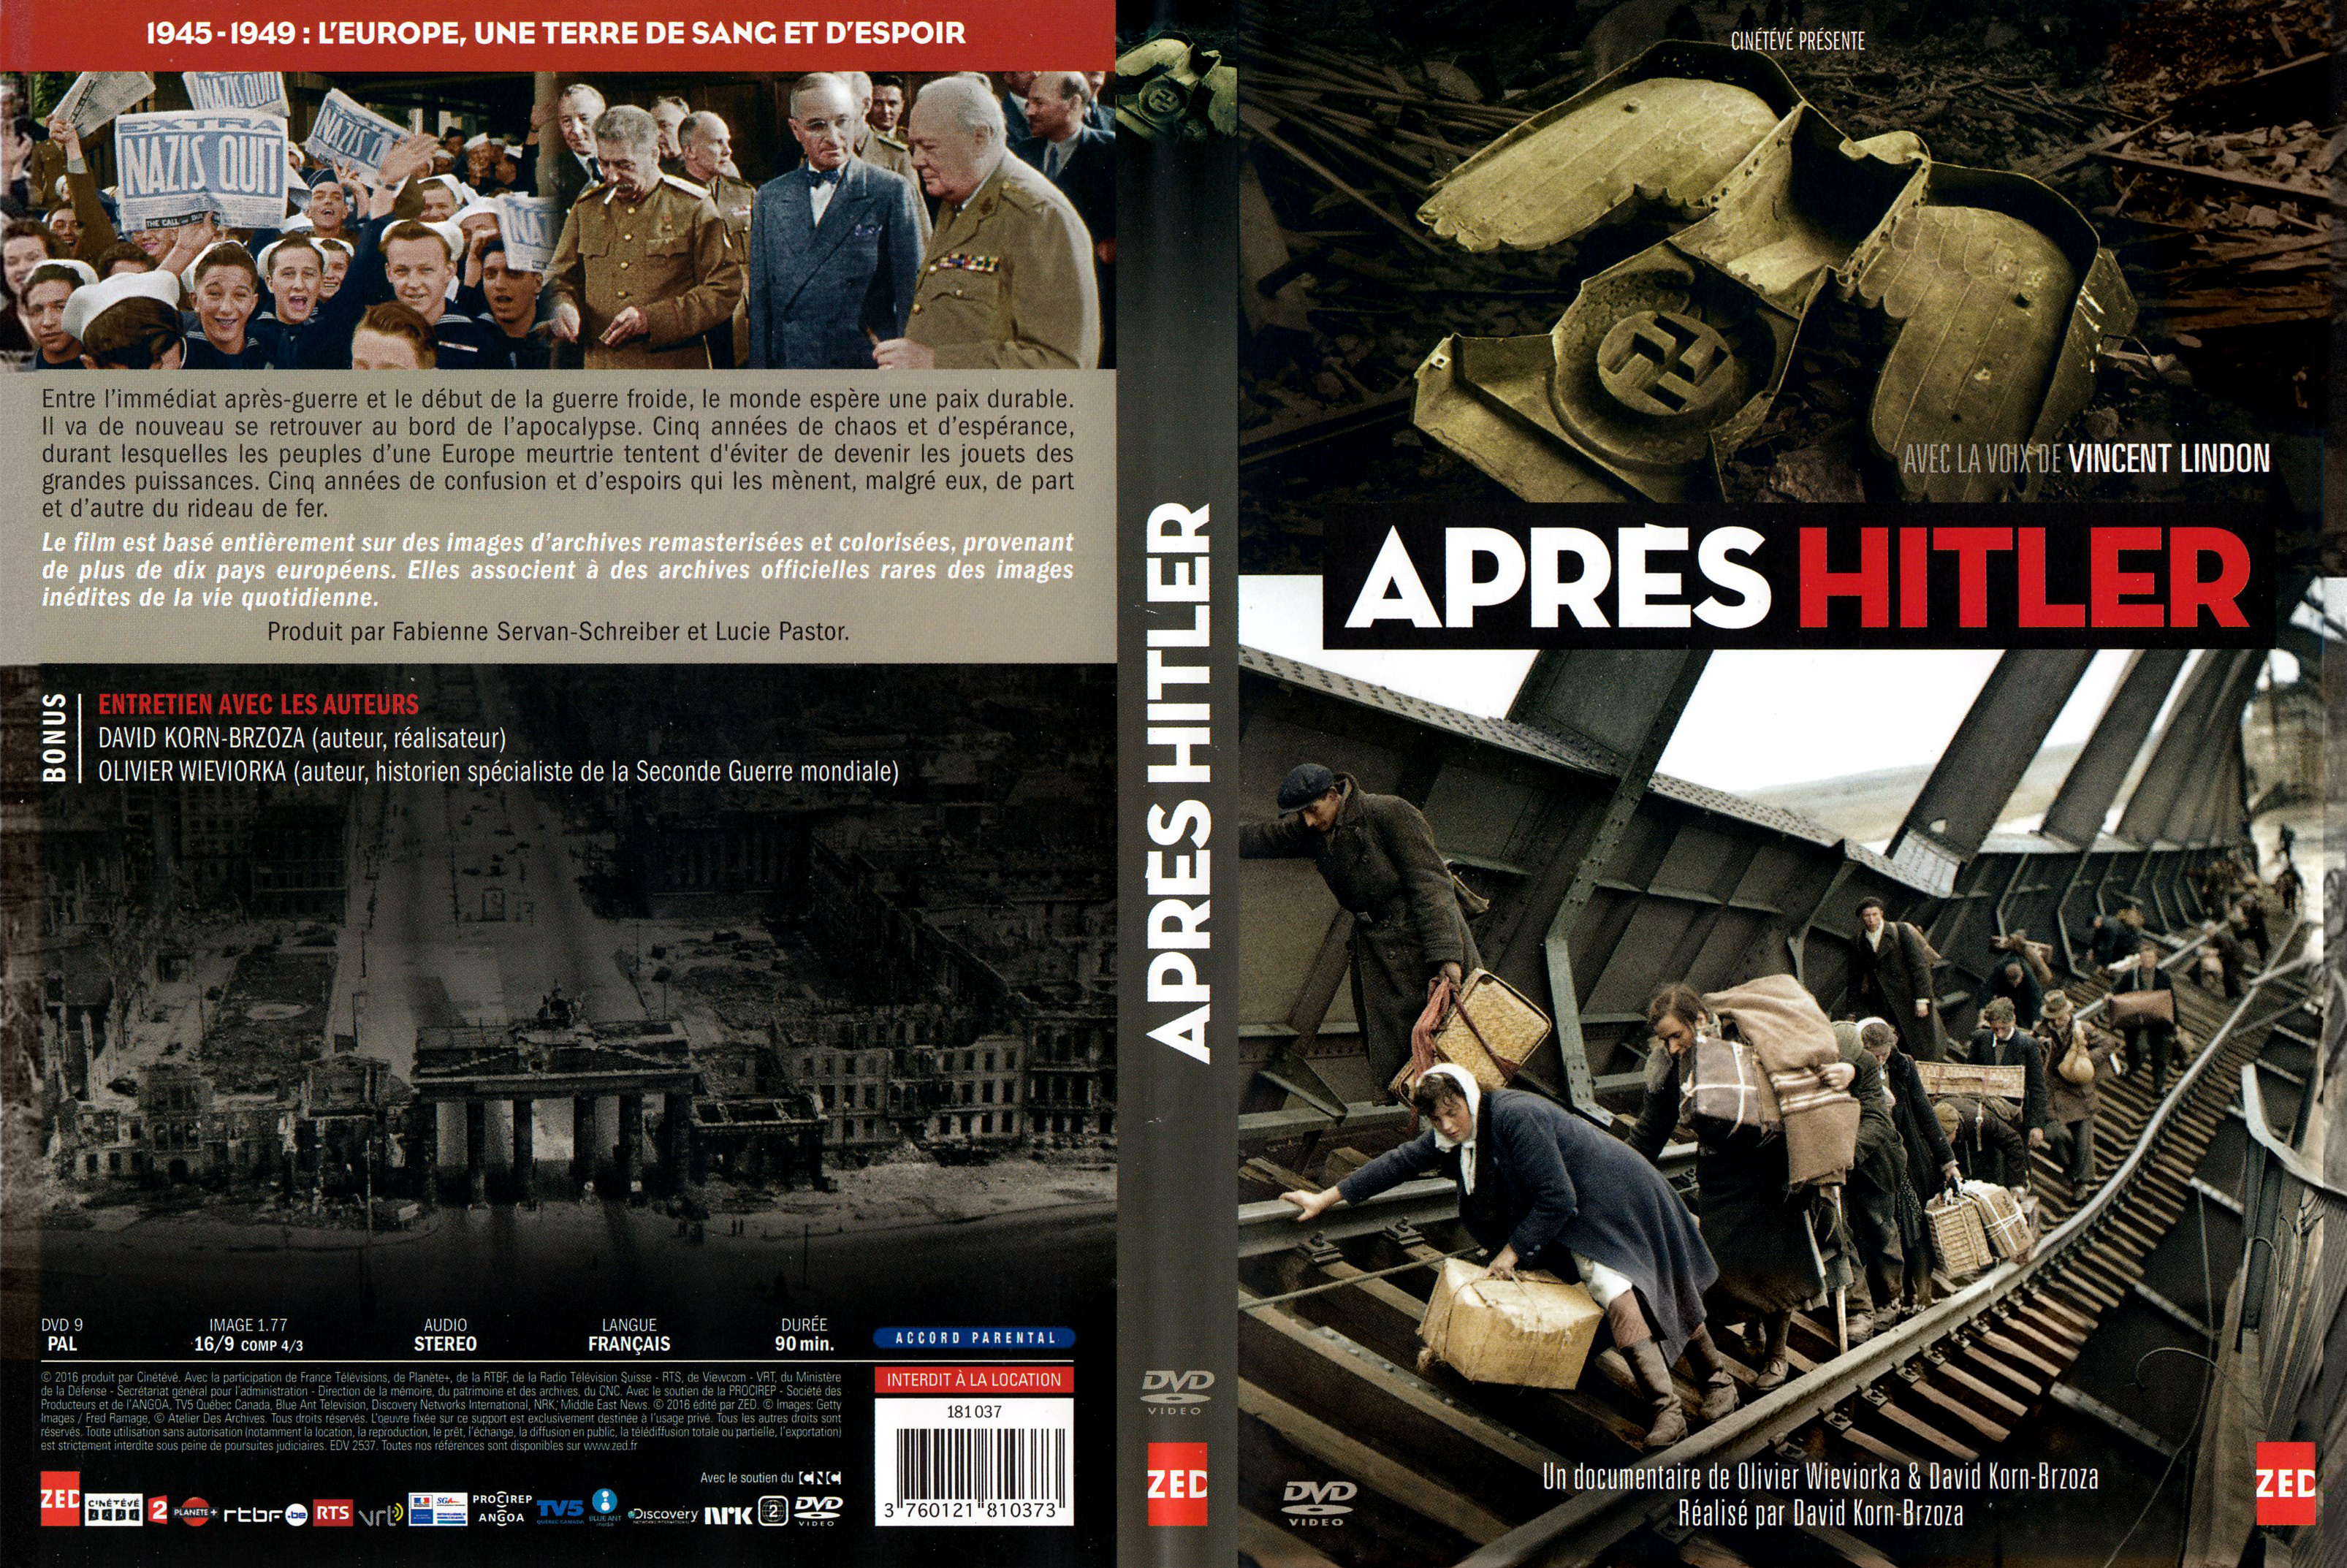 Jaquette DVD Aprs Hitler